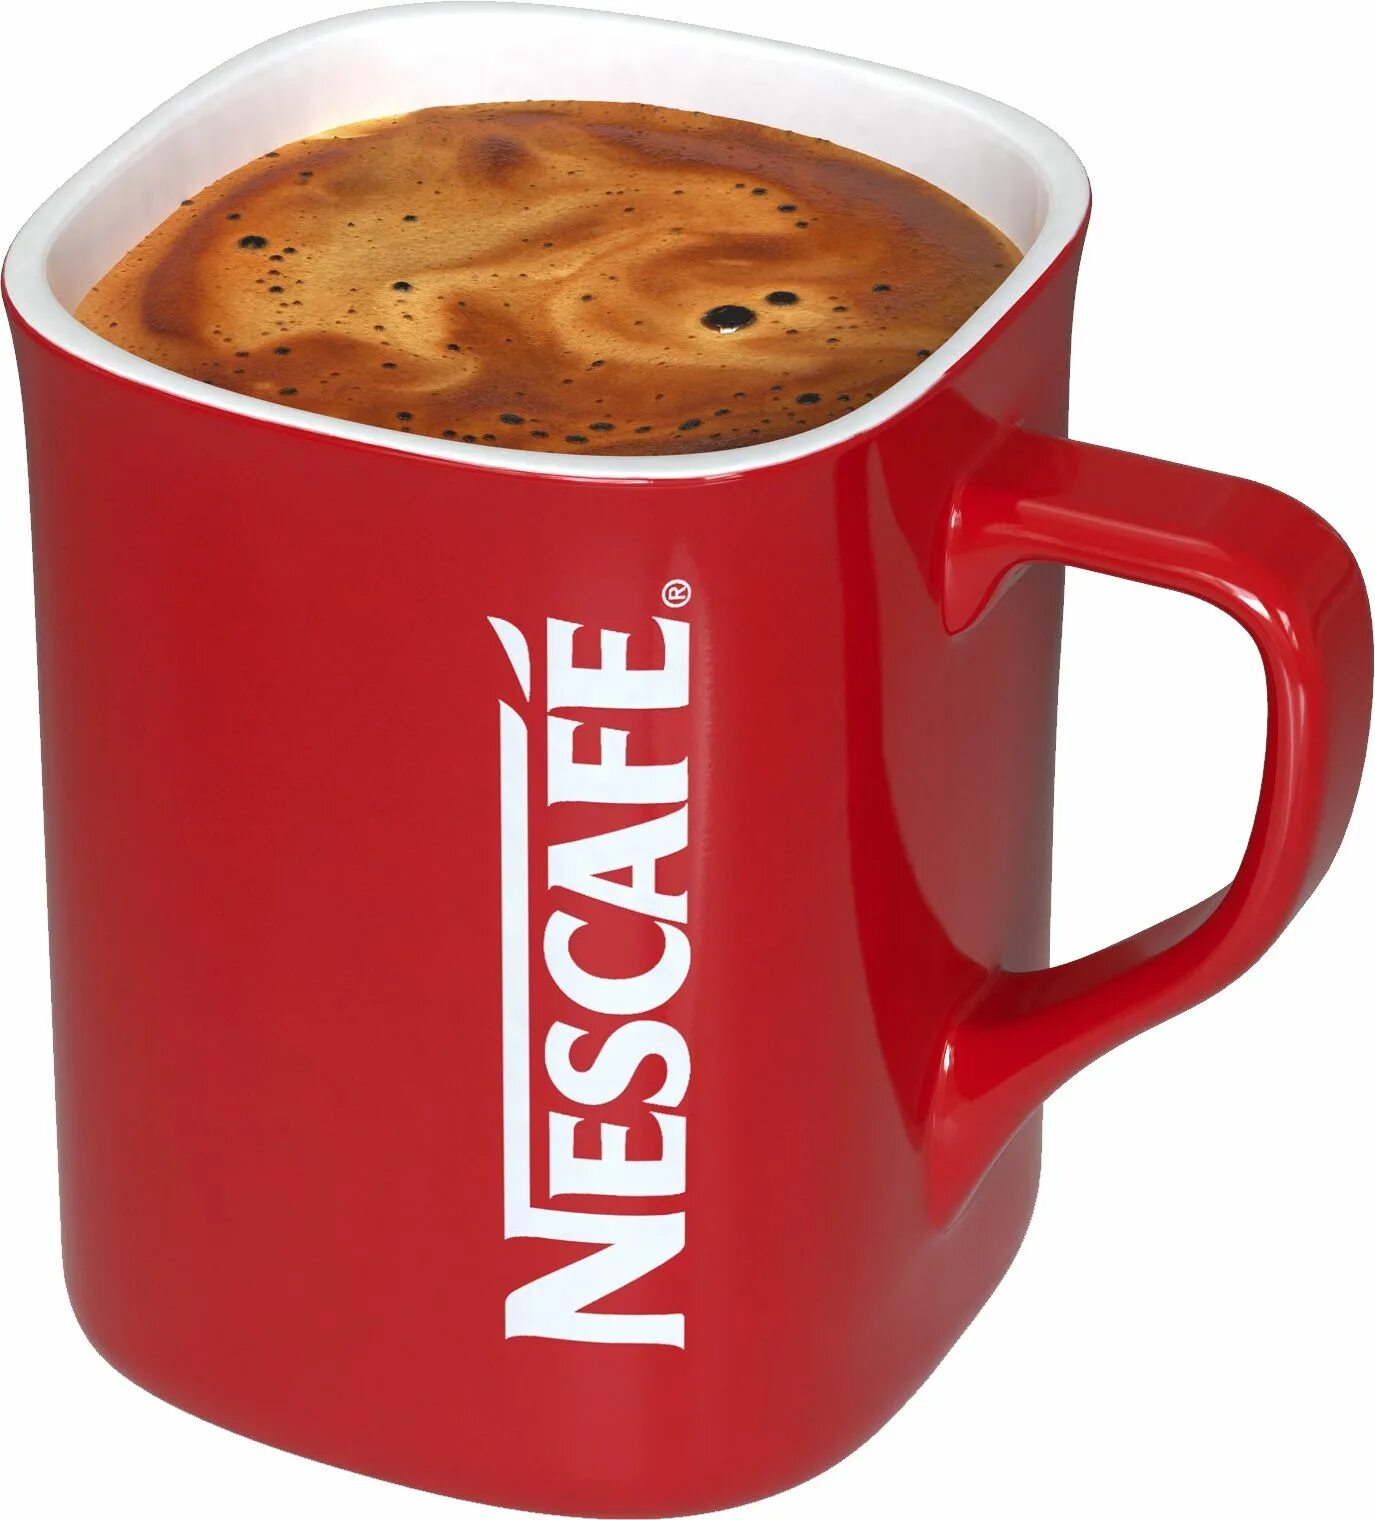 Кружки nescafe. Чашка Нескафе. Кружка кофе. Кружка Nescafe. Кофе Нескафе.